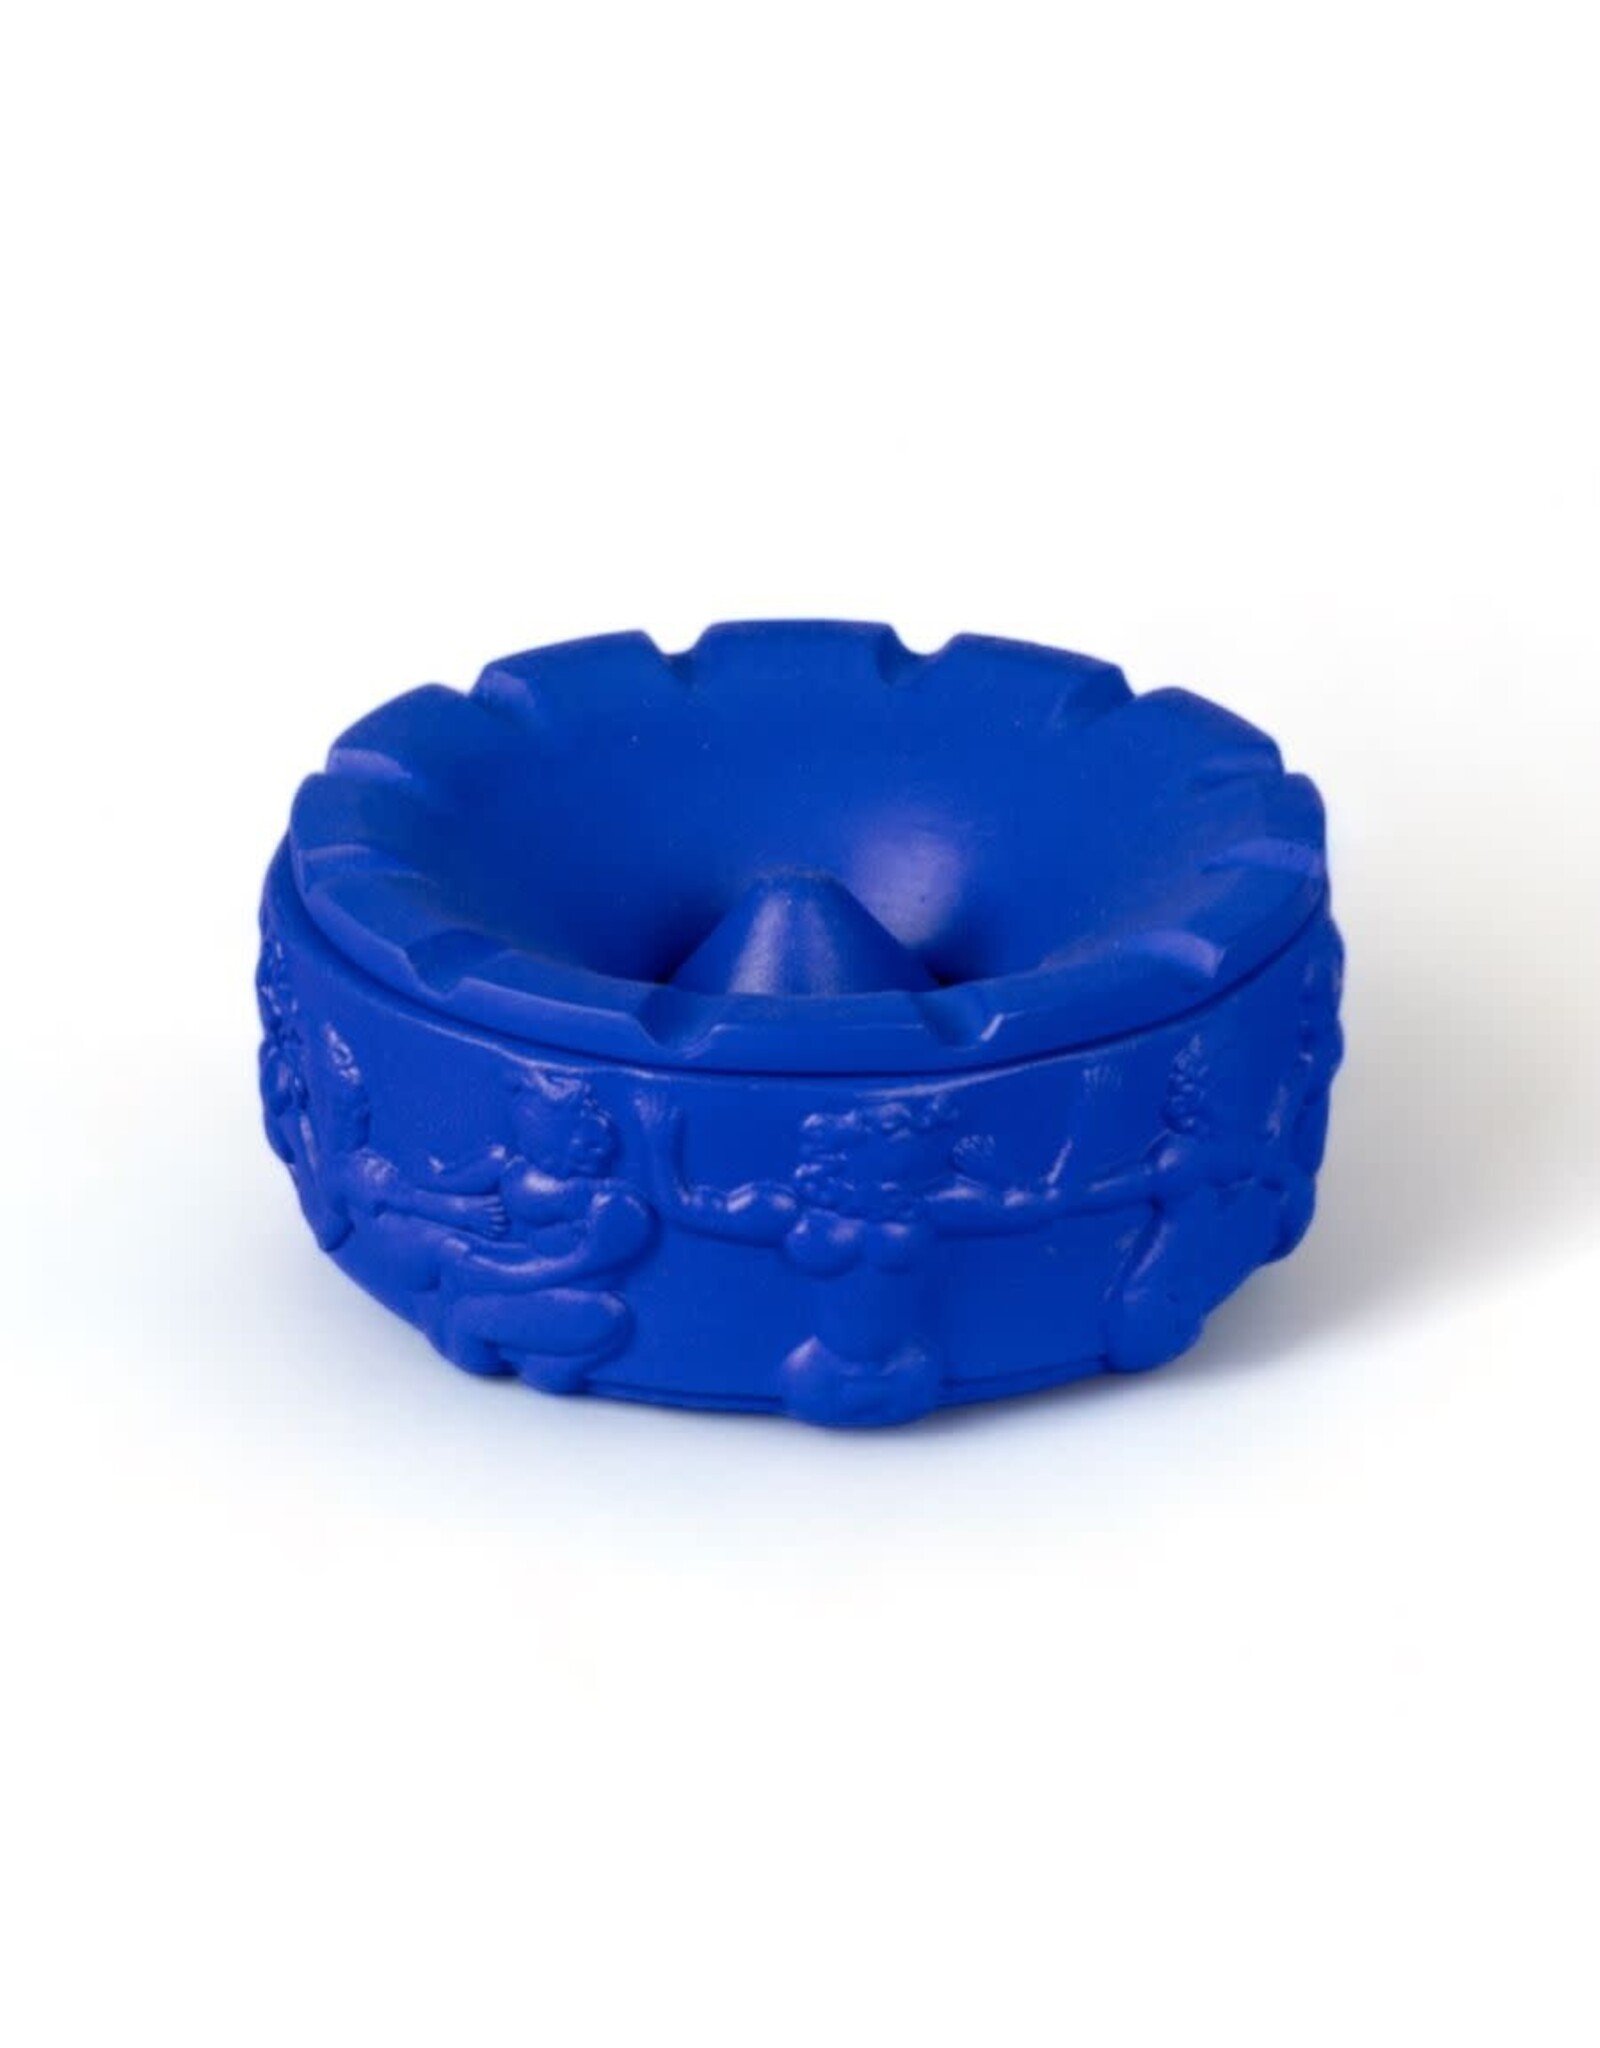 seletti-blue-terracotta-dialogues-ashtray